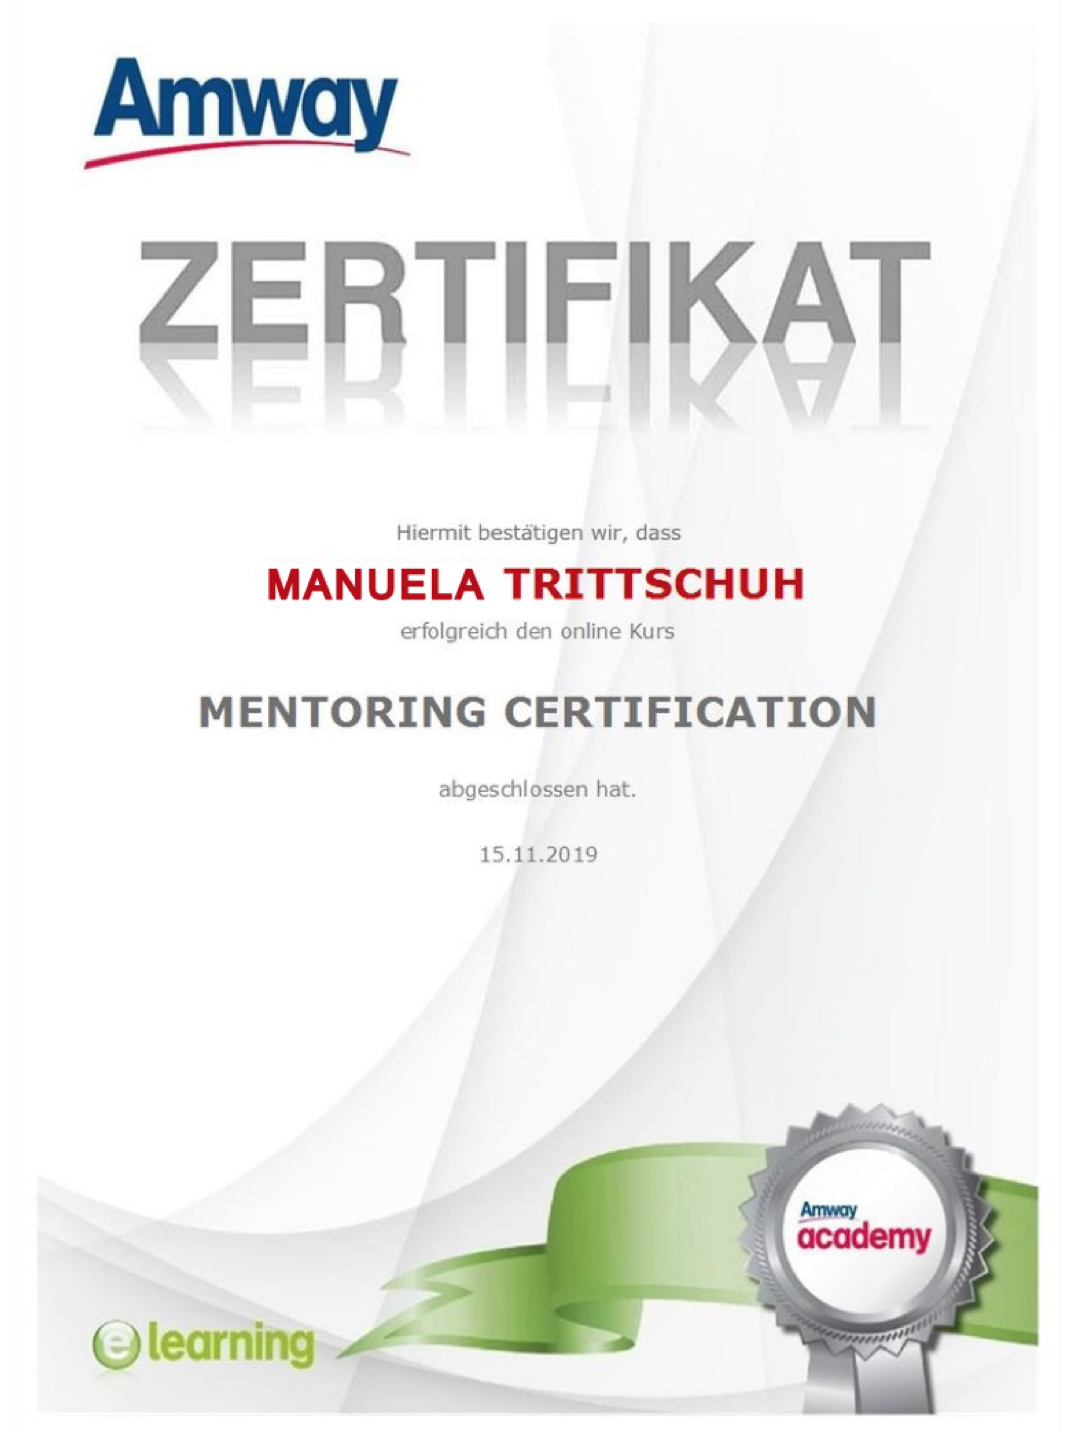 Zertifikat - Mentoring - Manuela Trittschuh